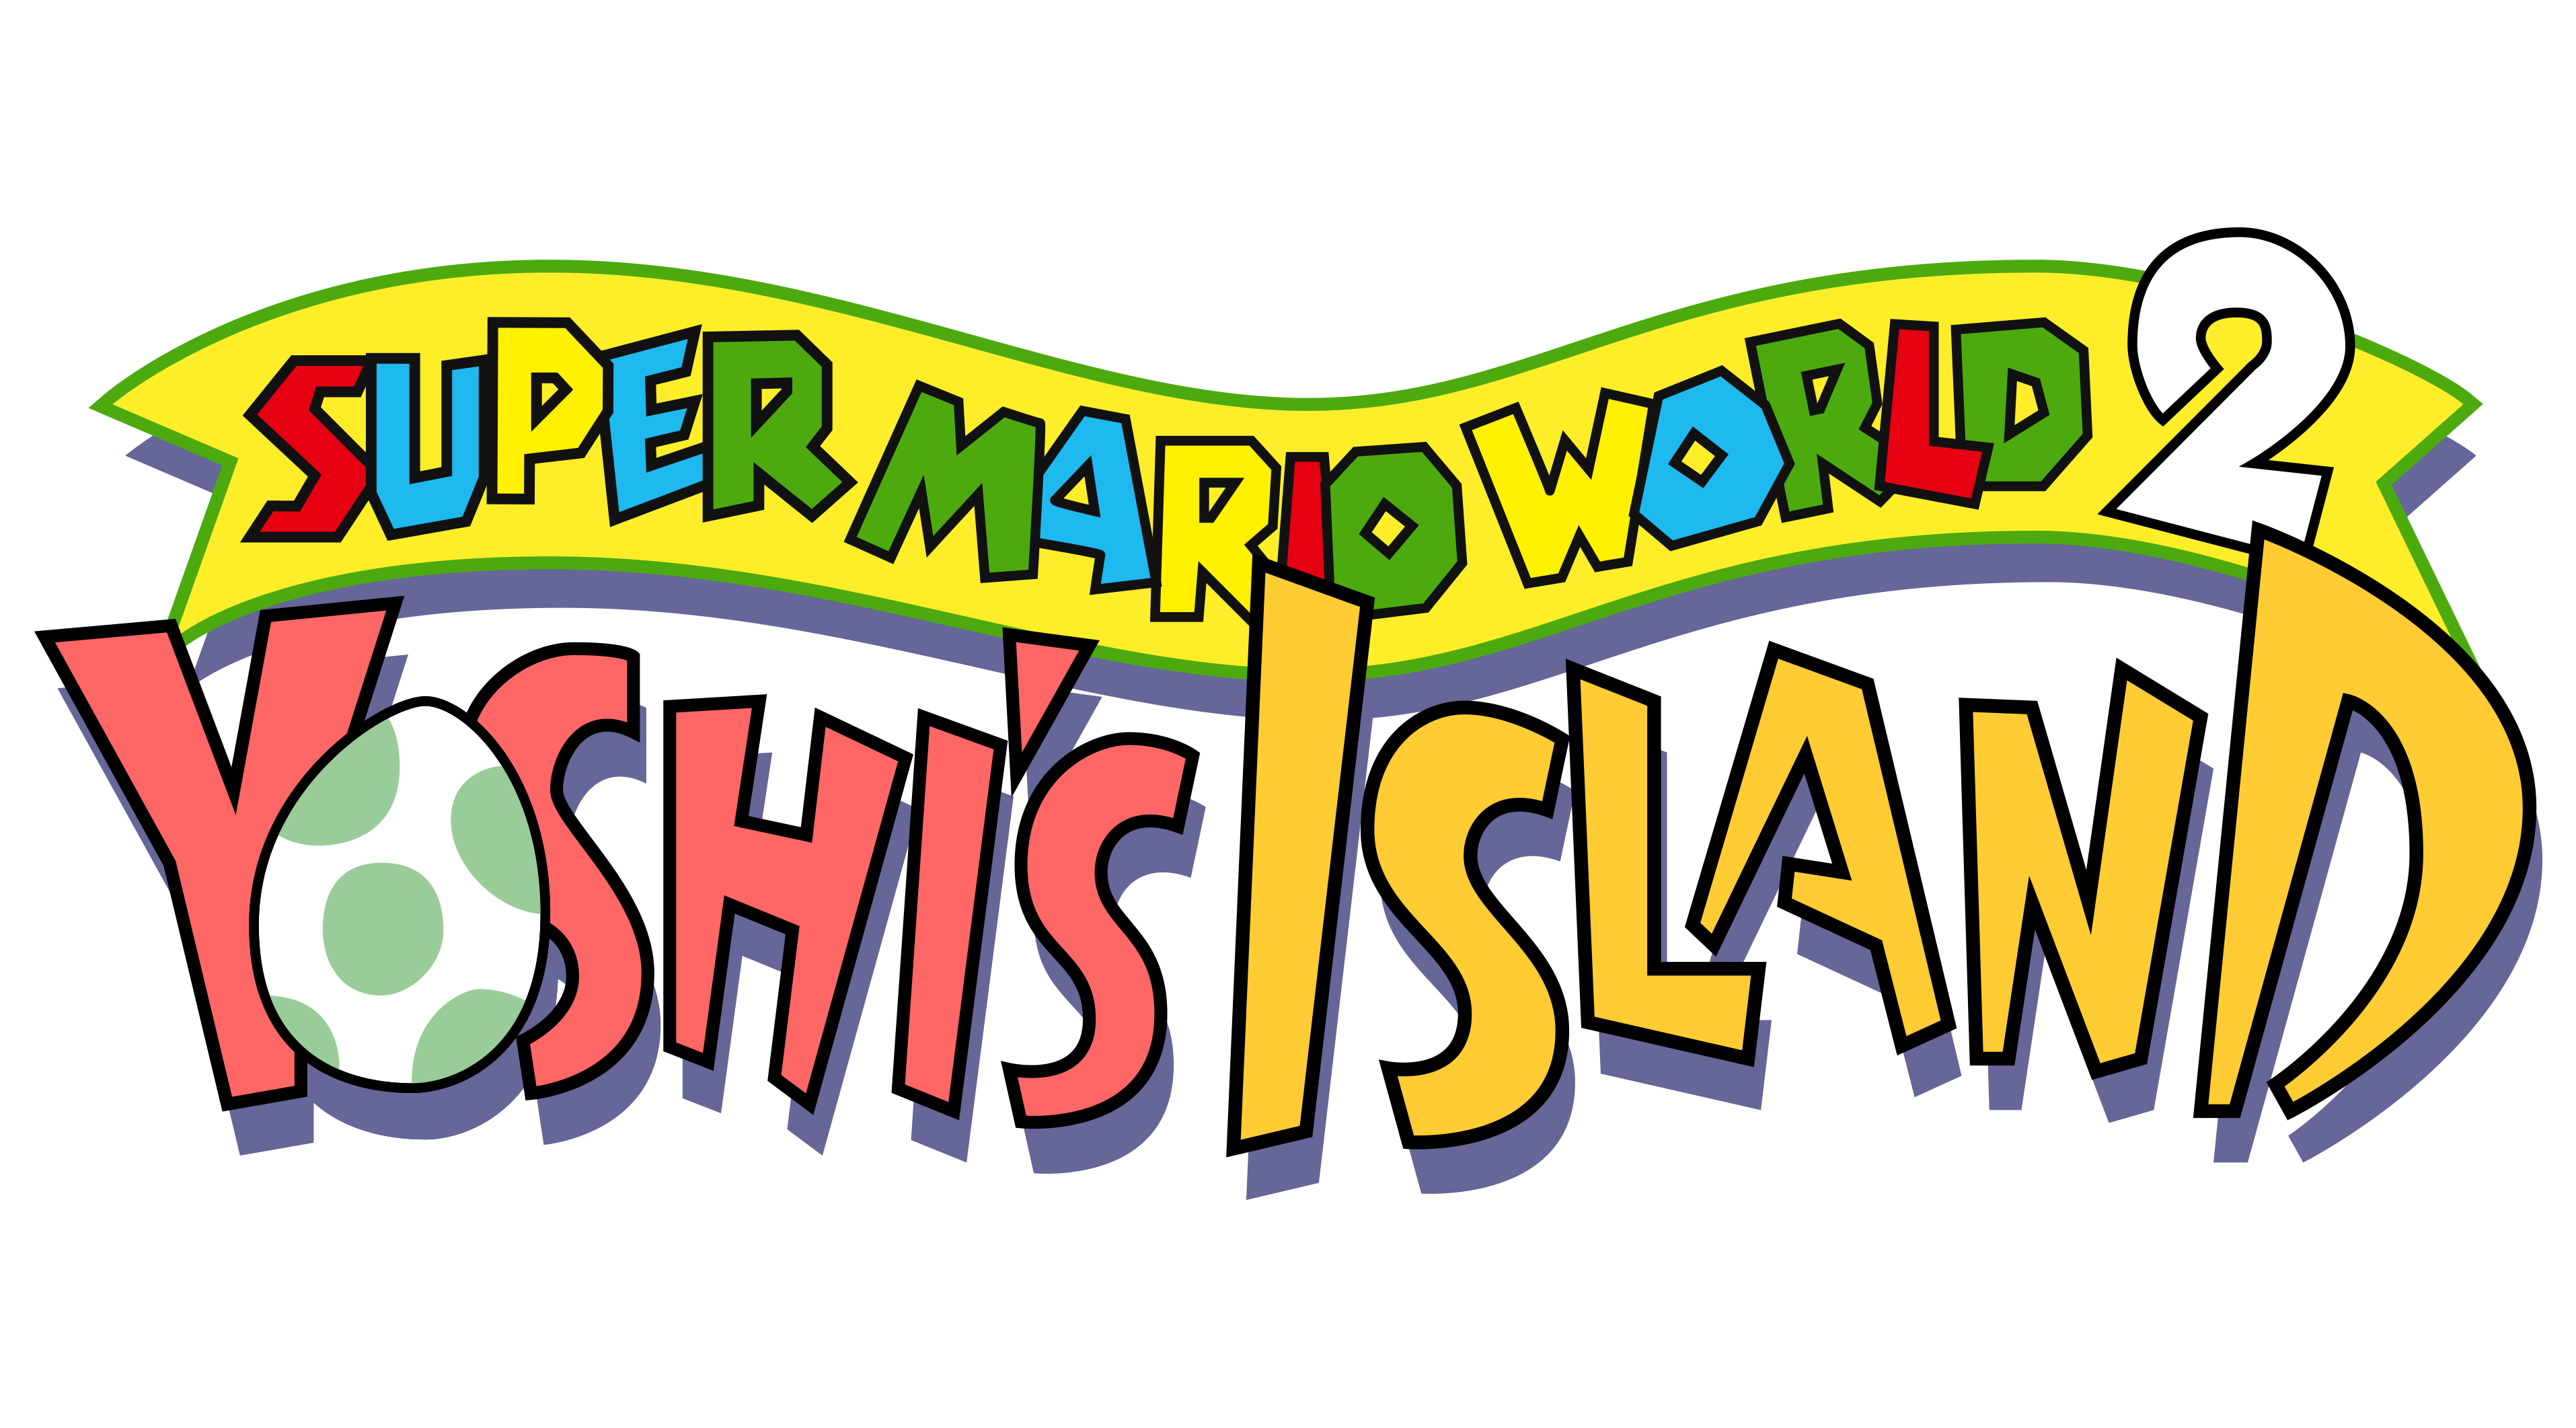 Super mario world yoshi's island. Super Mario World 2 - Yoshi's Island Snes. Мир супер Марио для супер Нинтендо. Super Mario World 2 Snes. Логотип супер Марио ворлд.